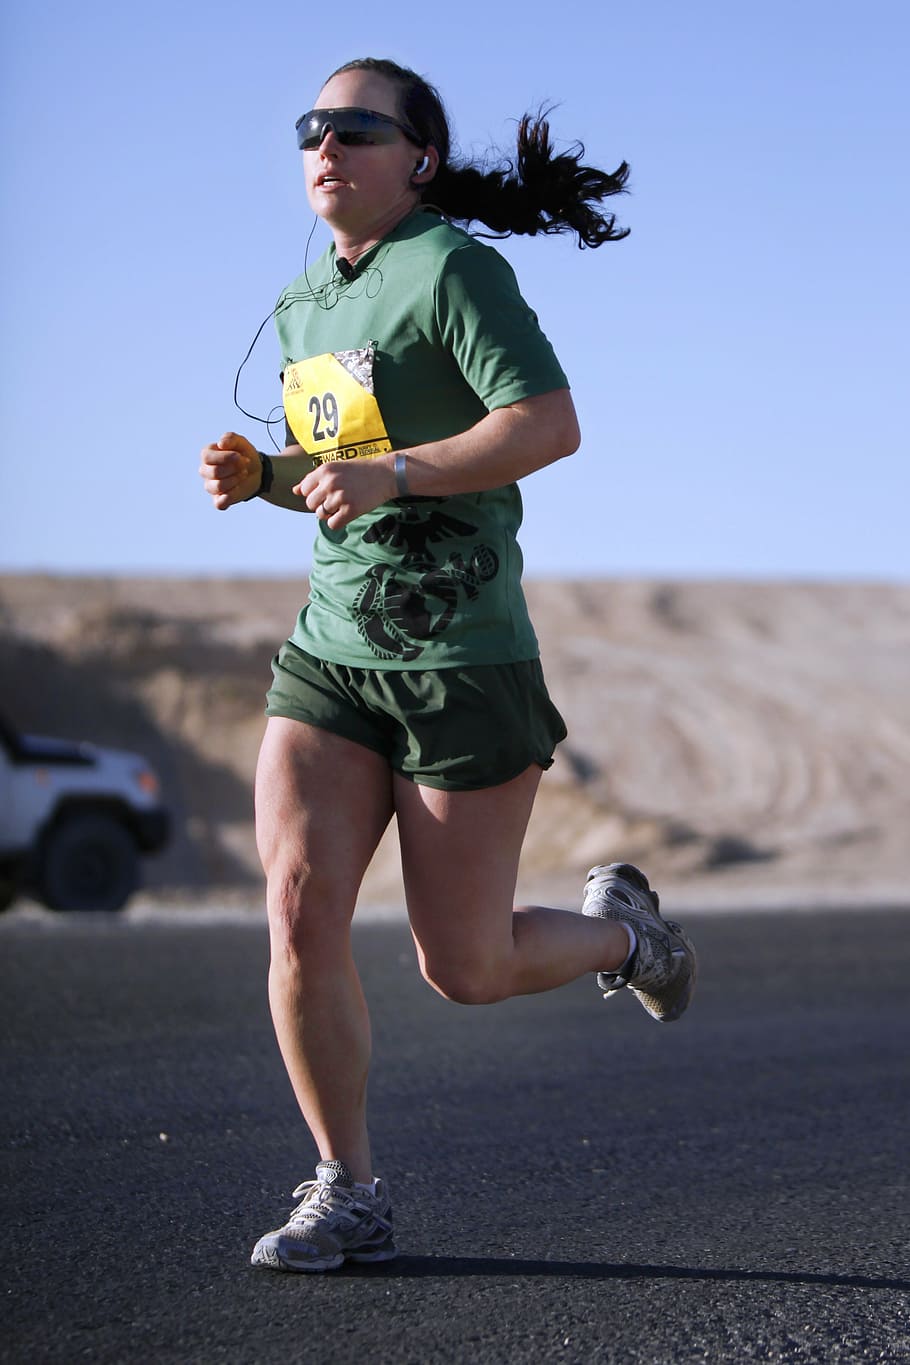 wanita, lari, jalan, siang hari, pelari, jarak jauh, kebugaran, perempuan, atlet, daya tahan